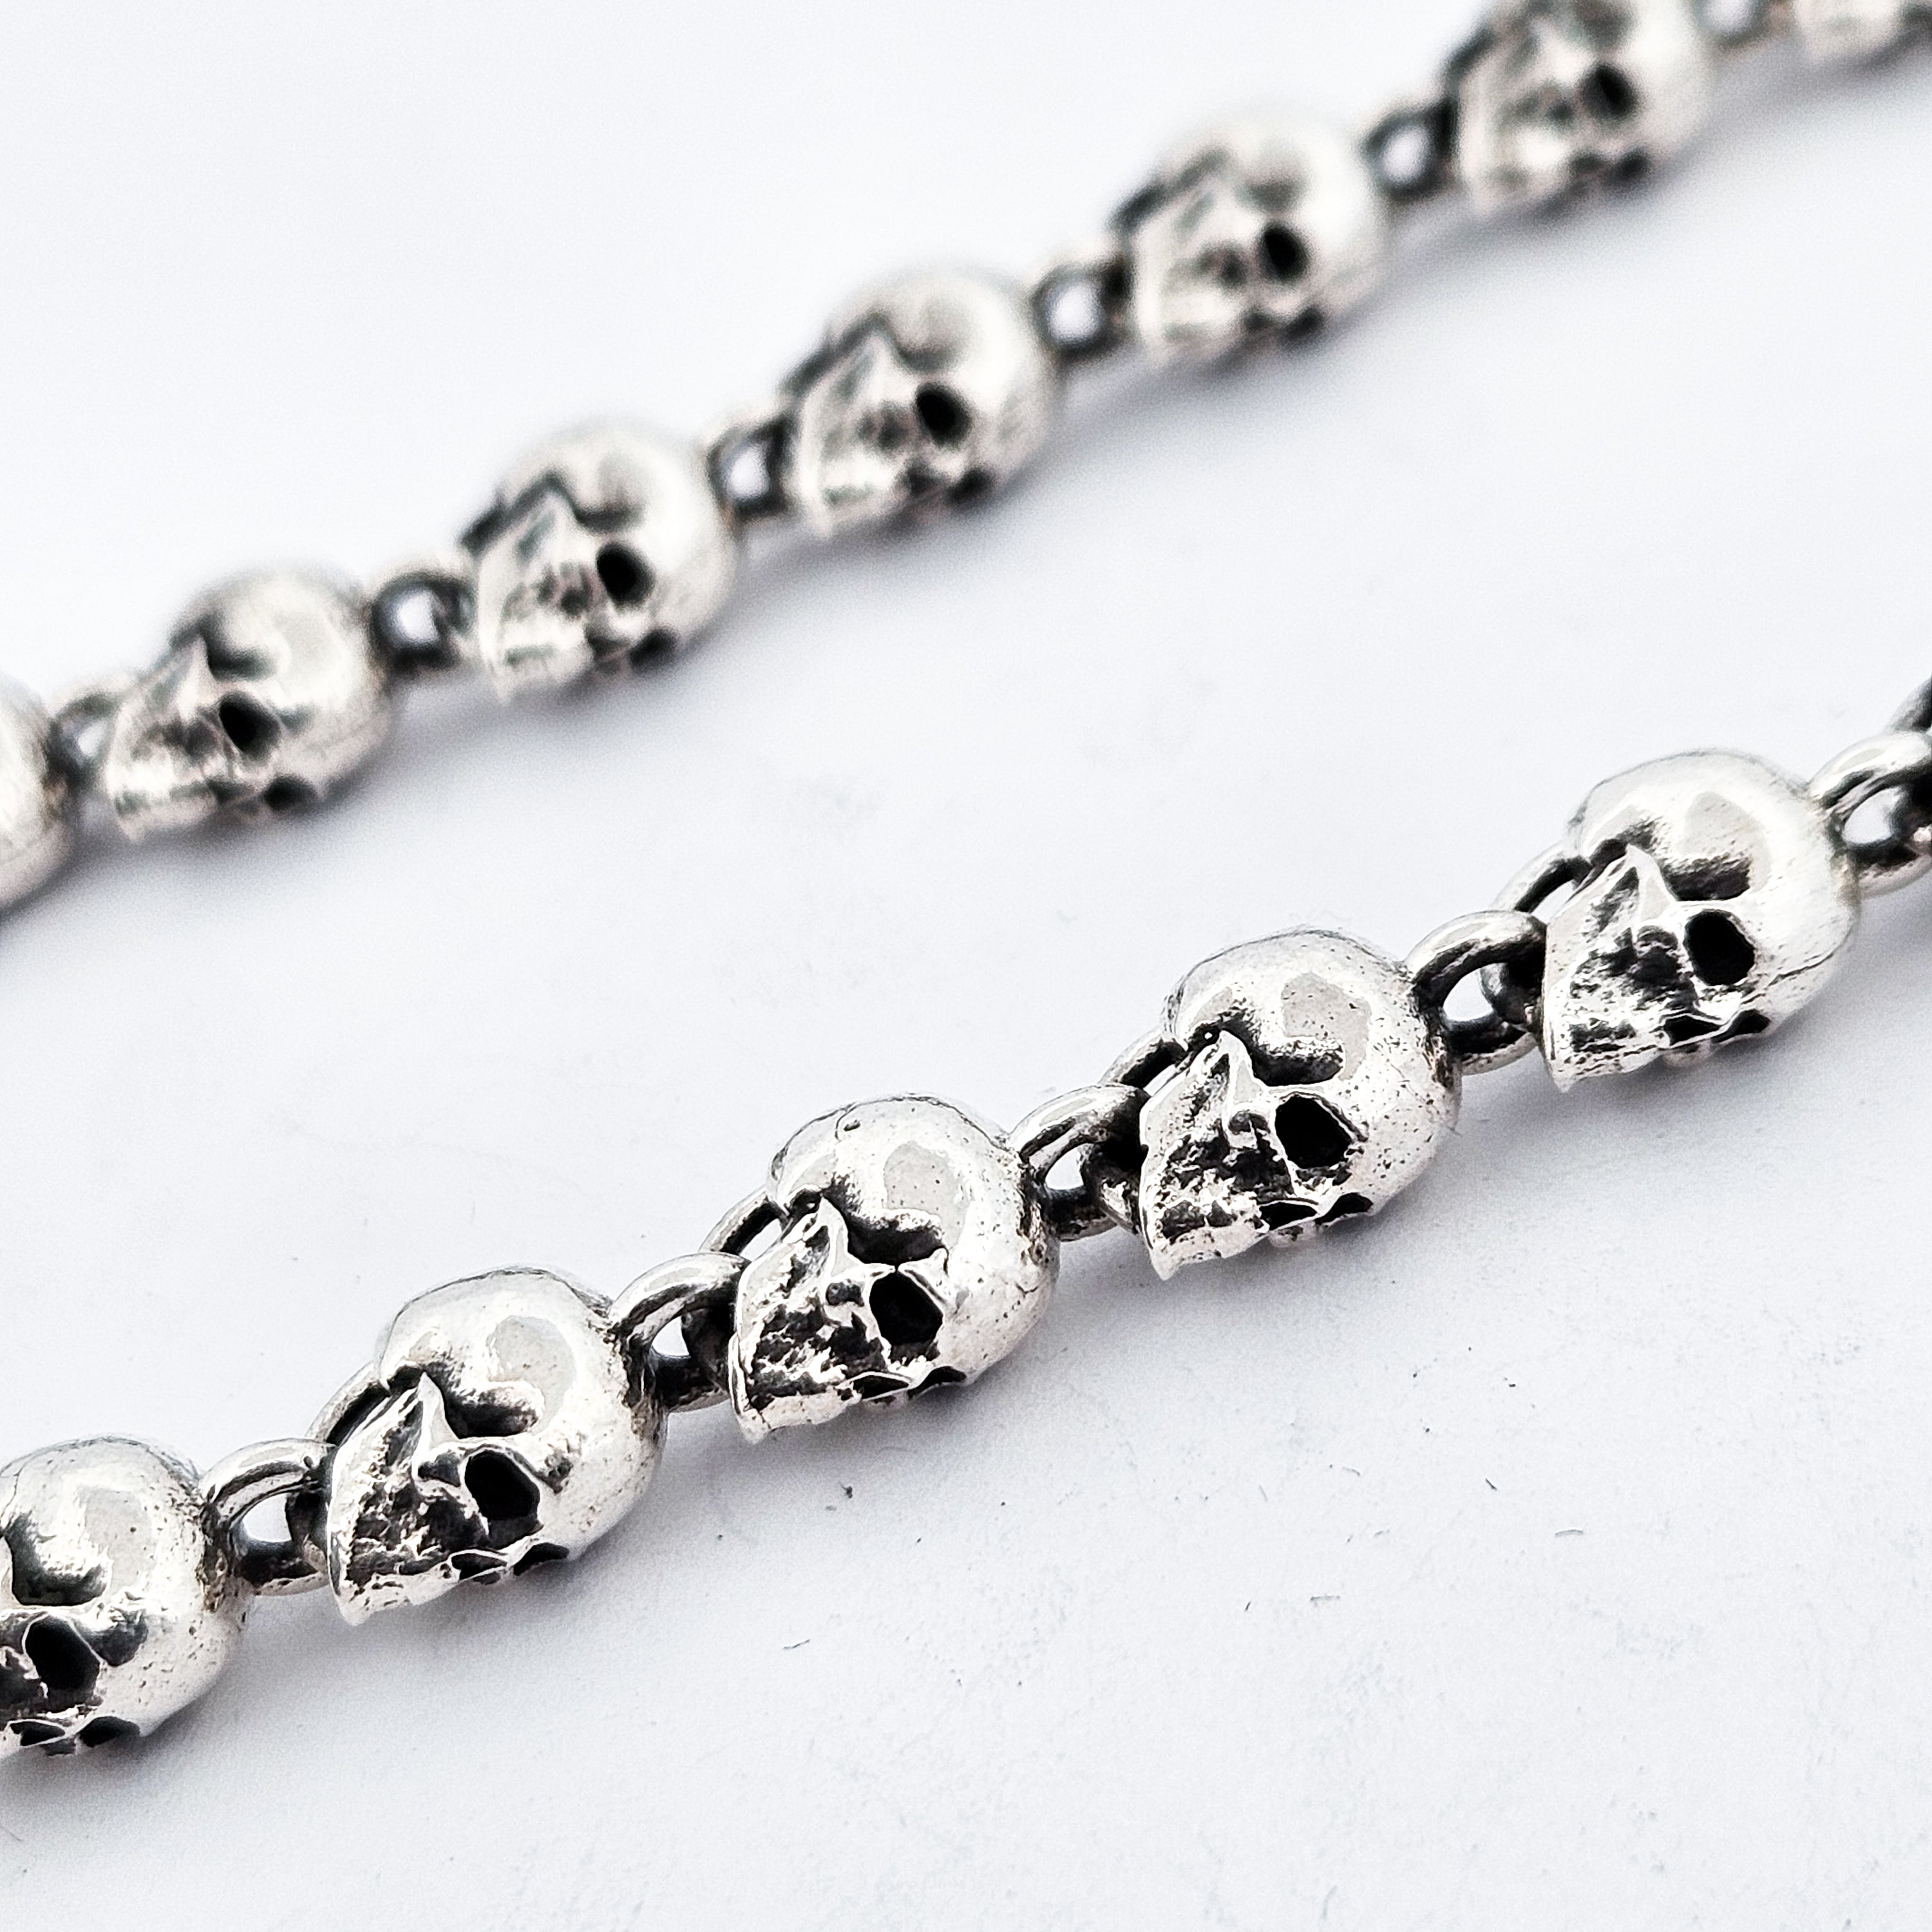 Heavy Skull Rosary Necklace - Pendant Selection